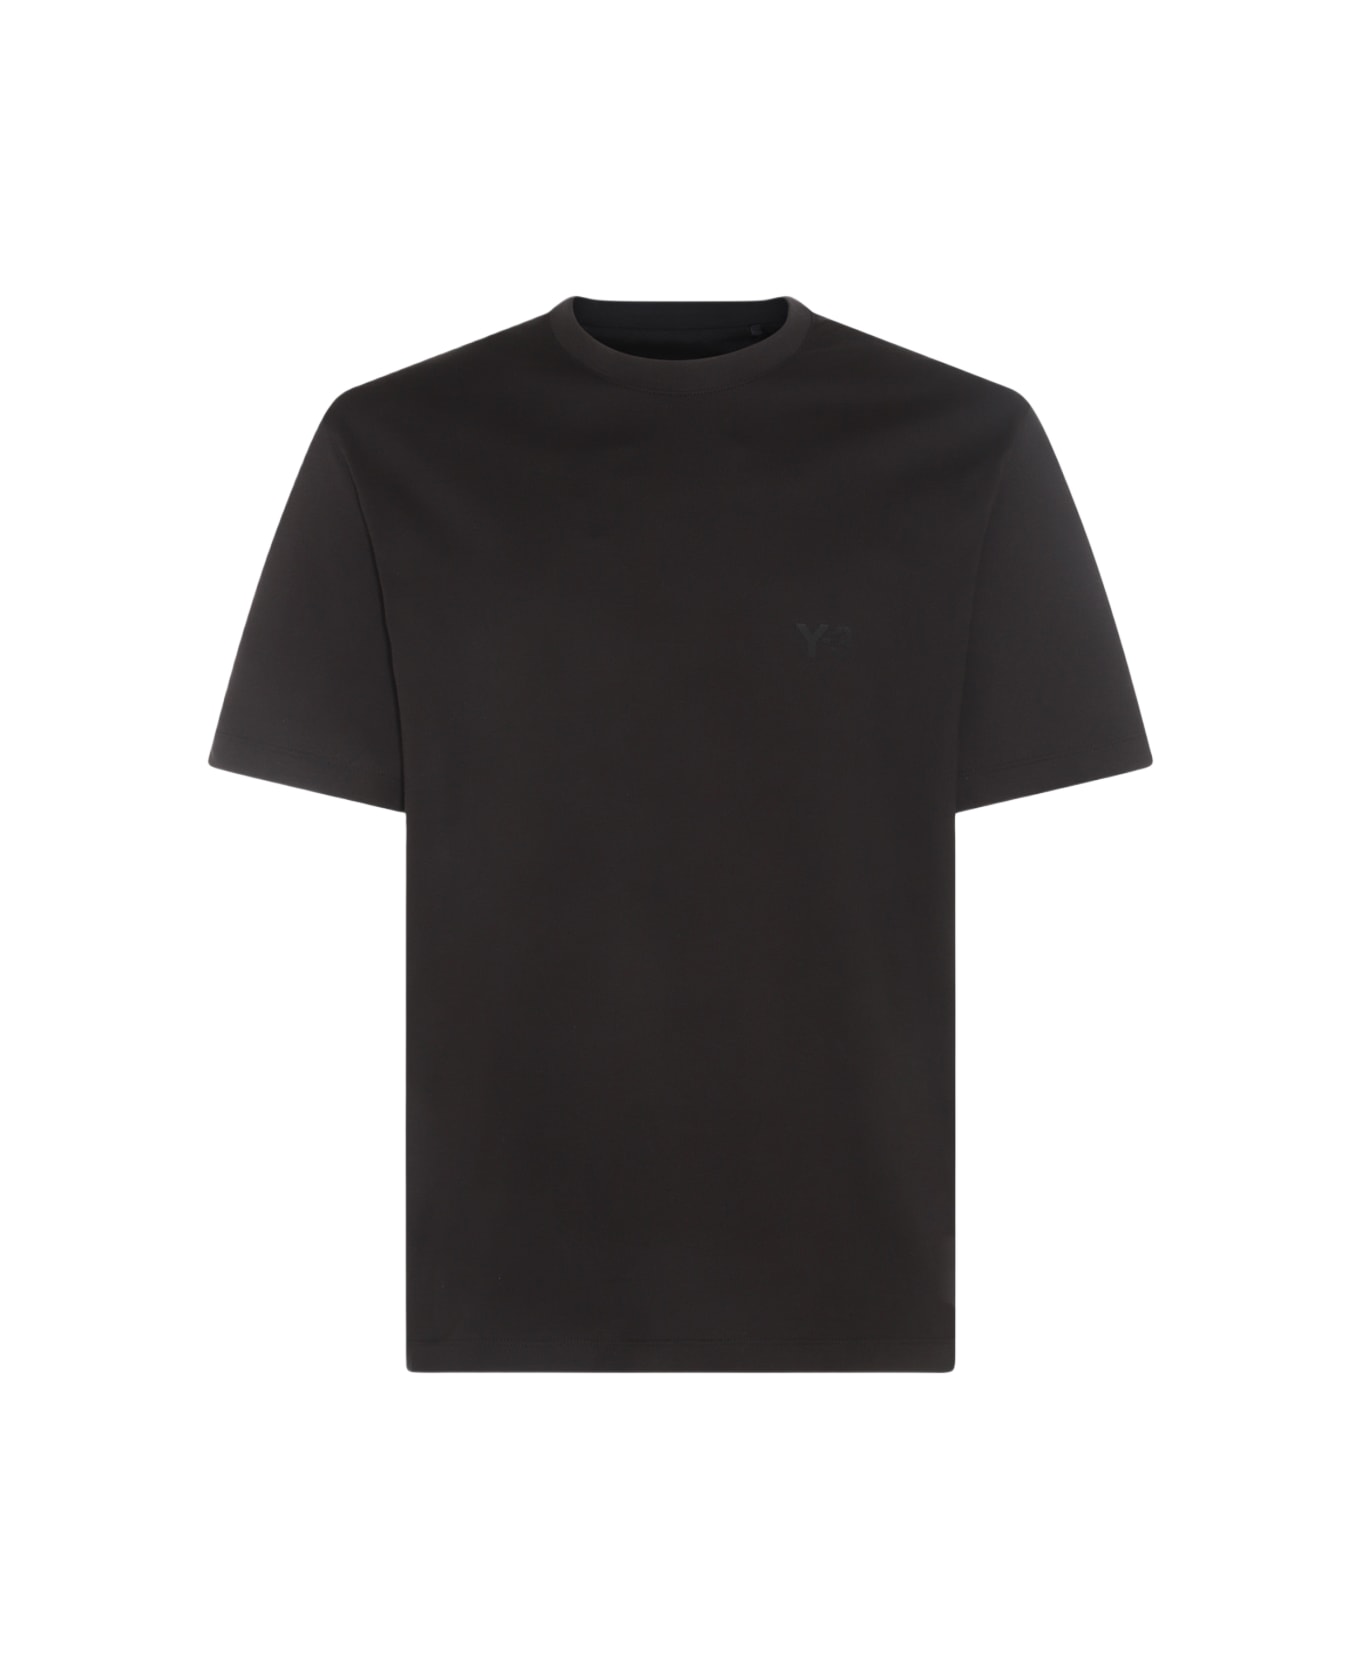 Y-3 Black Cotton T-shirt - Black